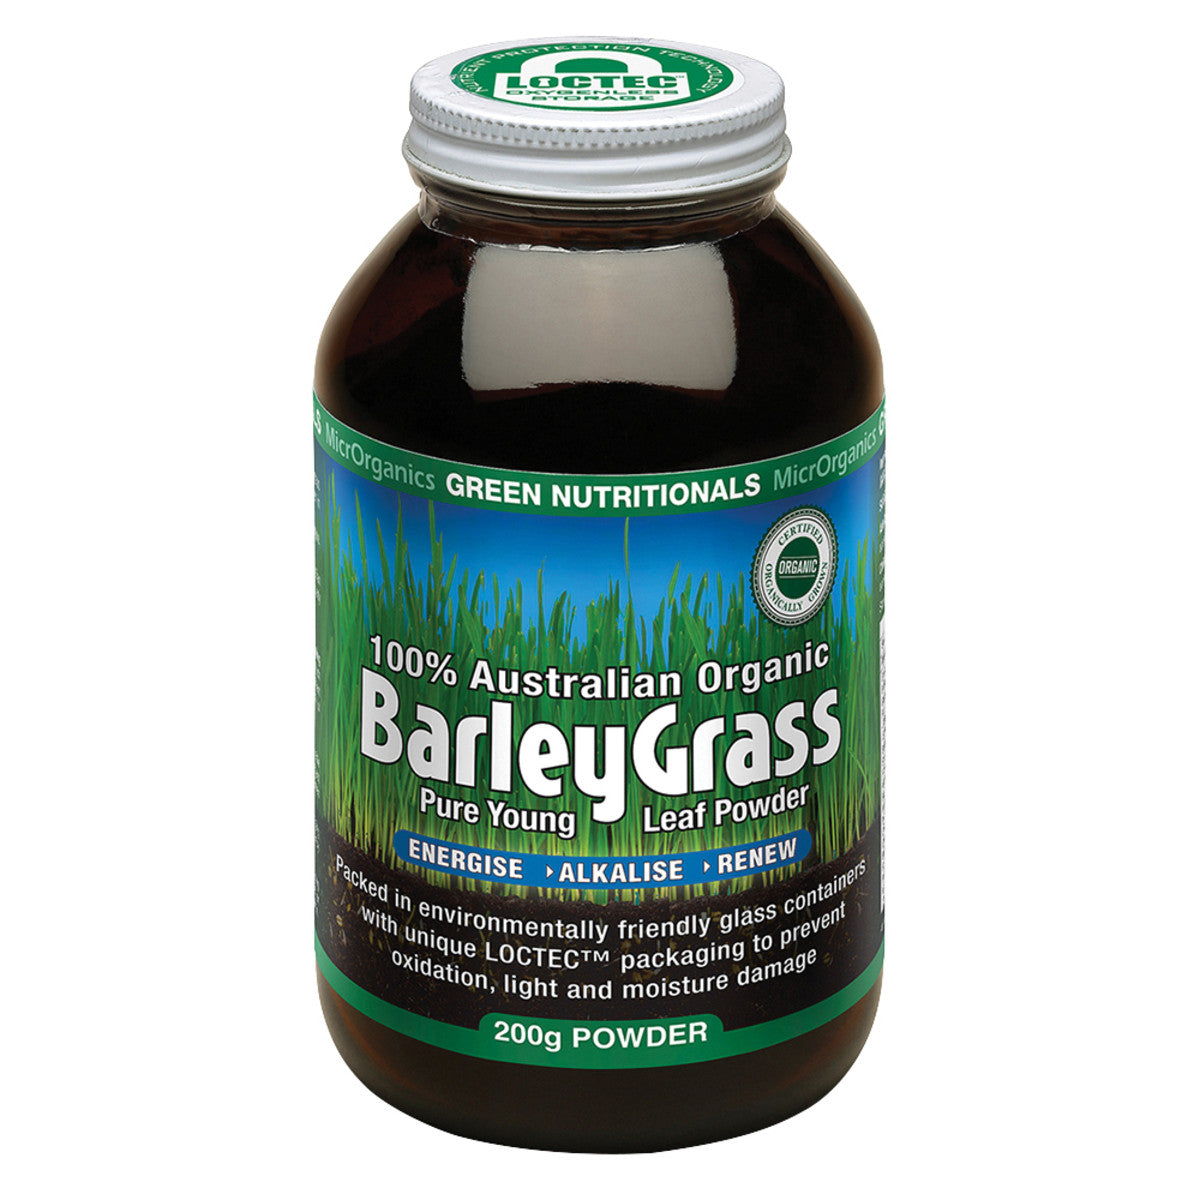 Green Nutritionals - Organic Australian BarleyGrass